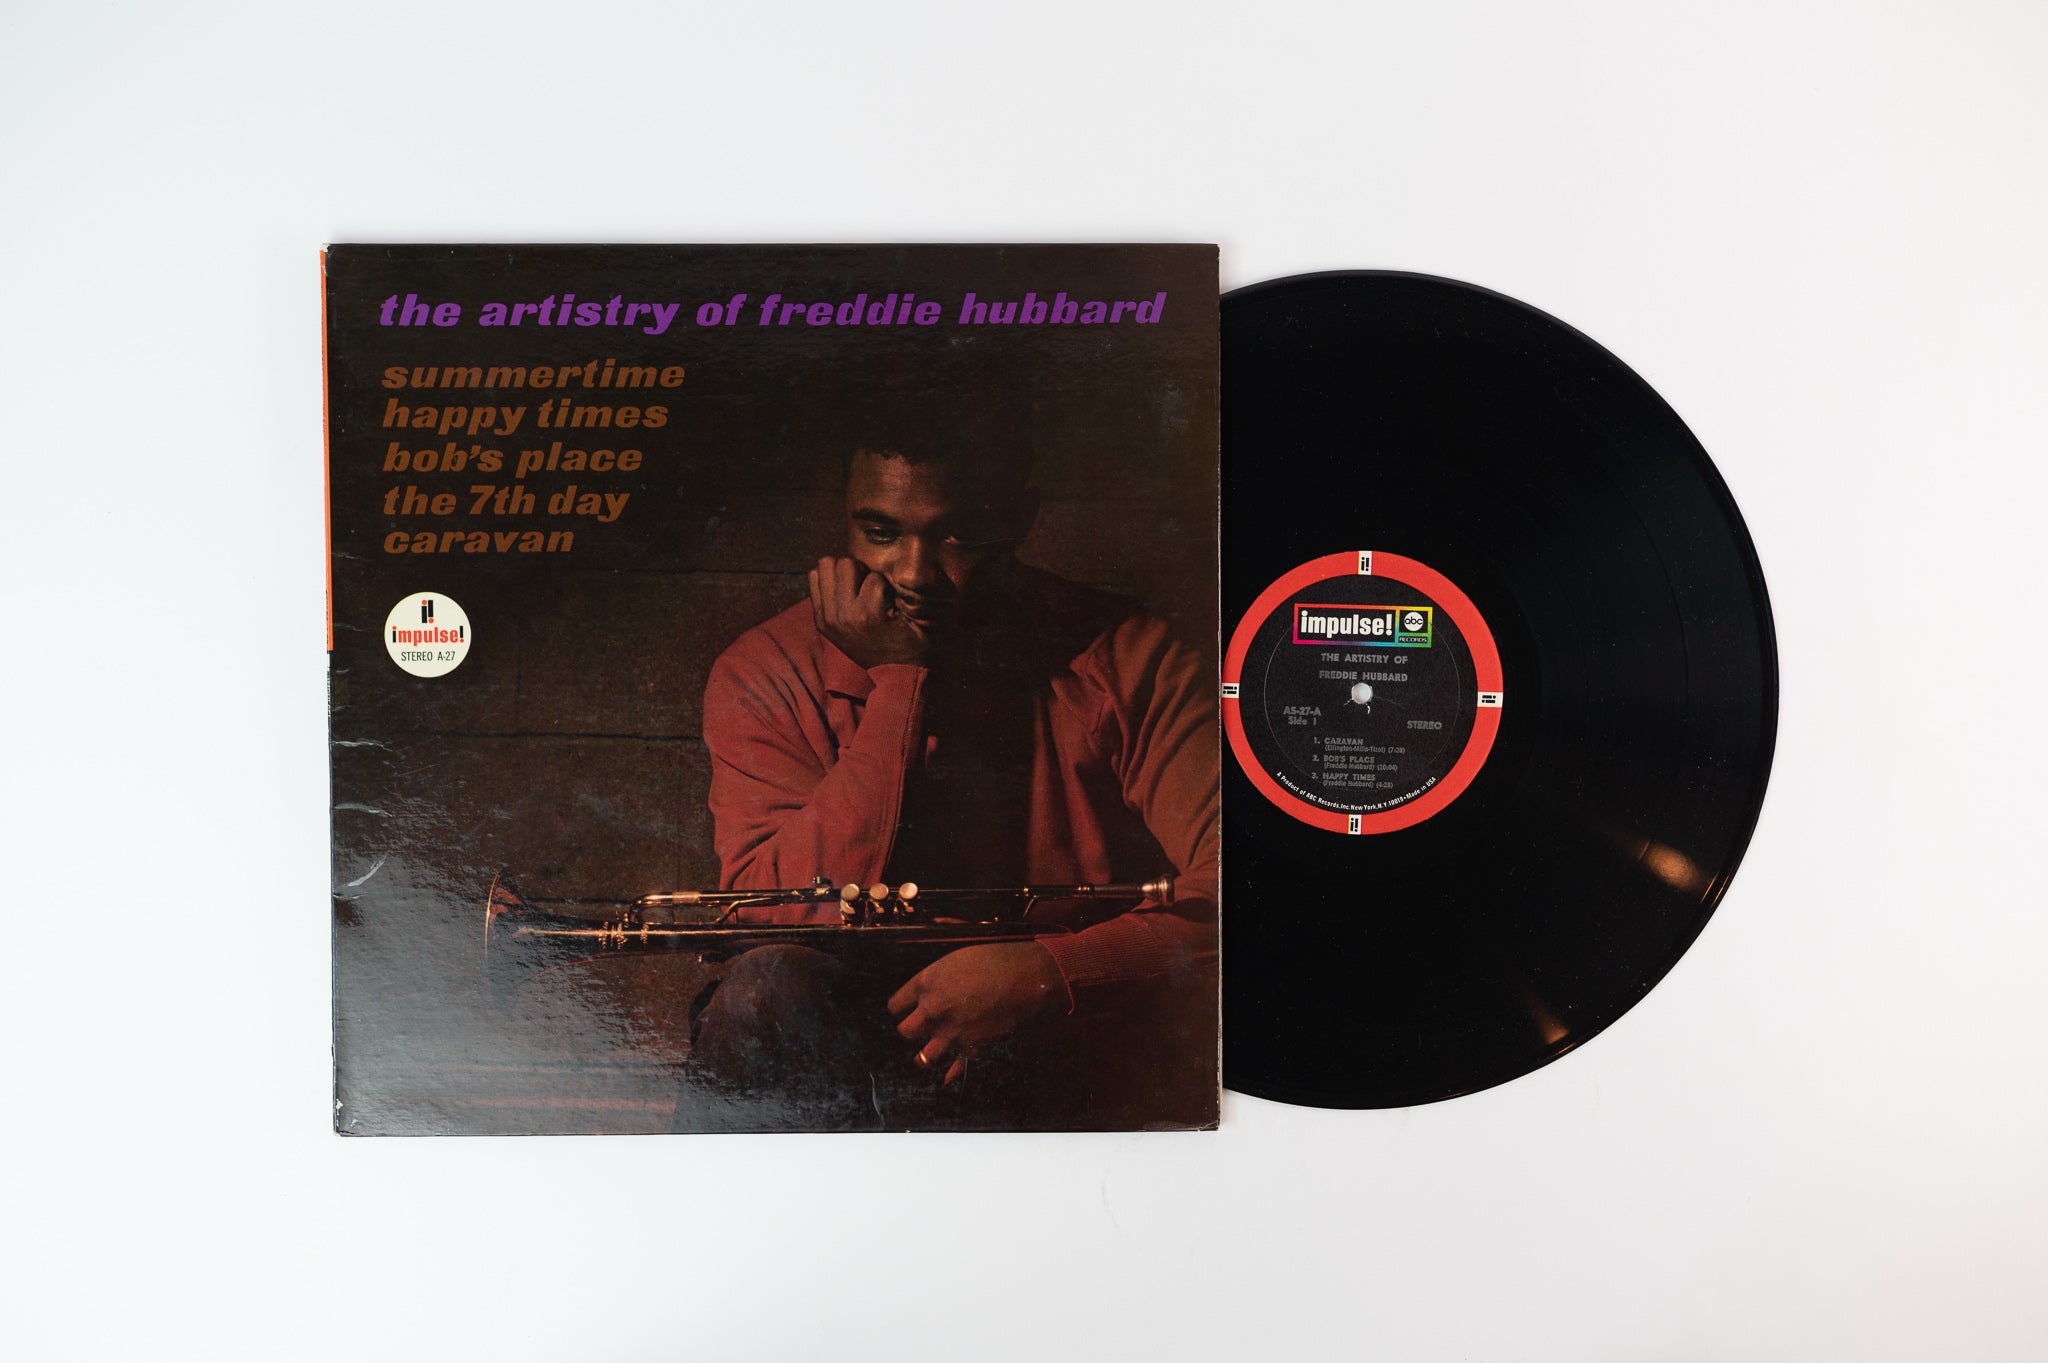 Freddie Hubbard - The Artistry Of Freddie Hubbard on ABC Impulse Reissue